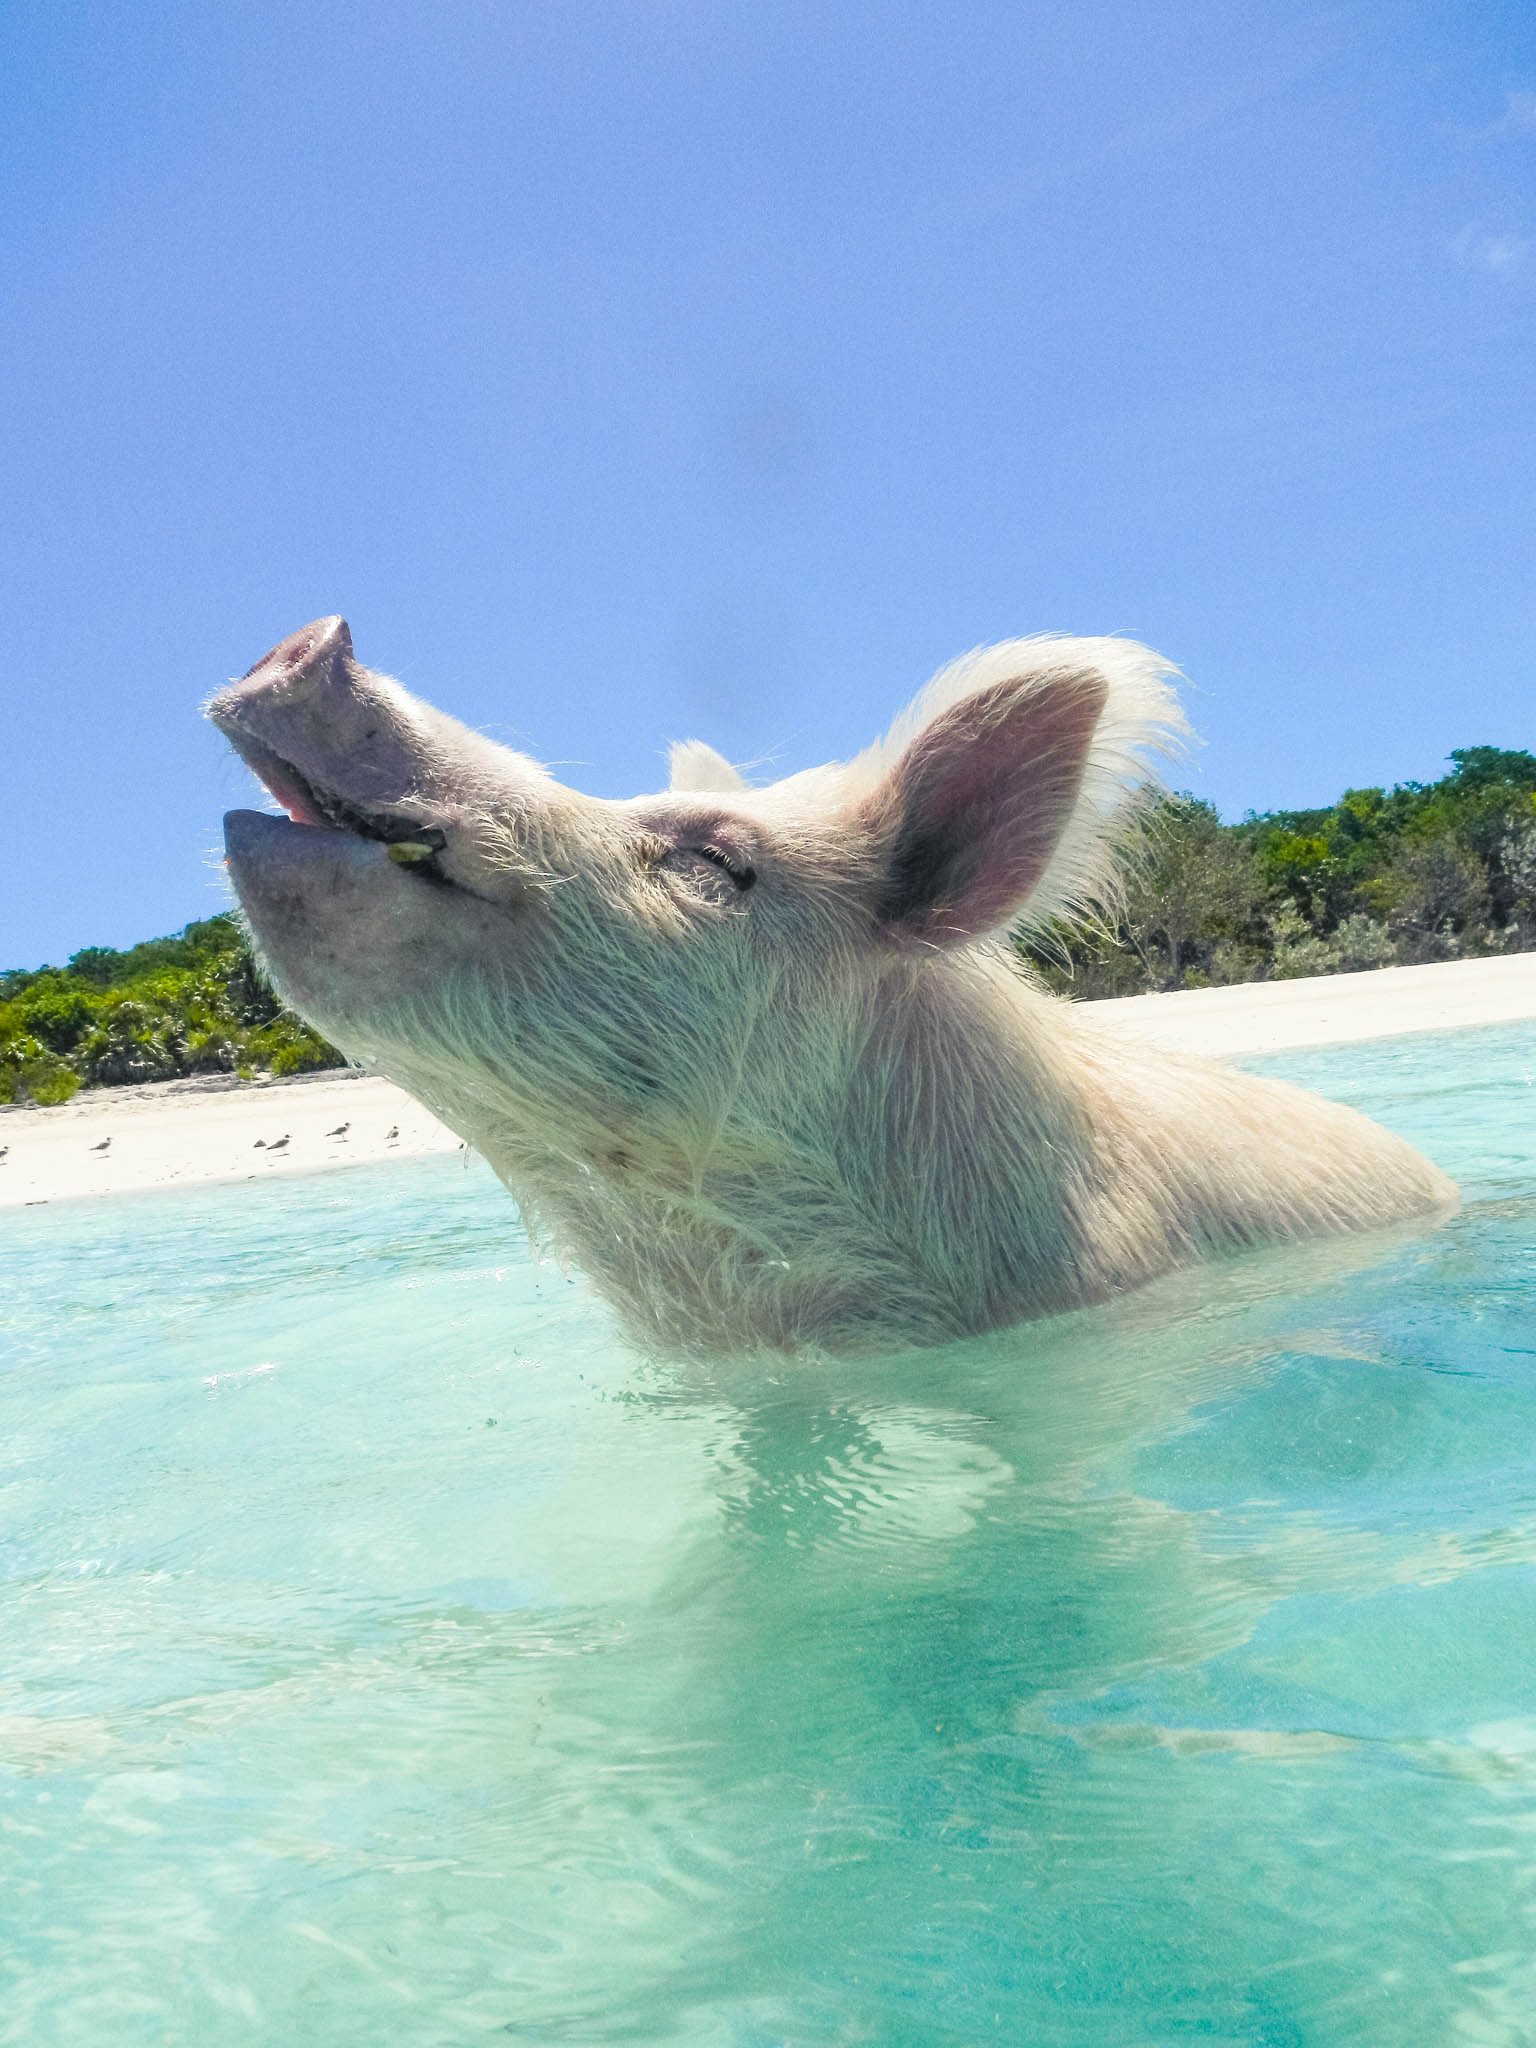 Pig Beach, Exumas, The Bahamas by Patrick Bennett